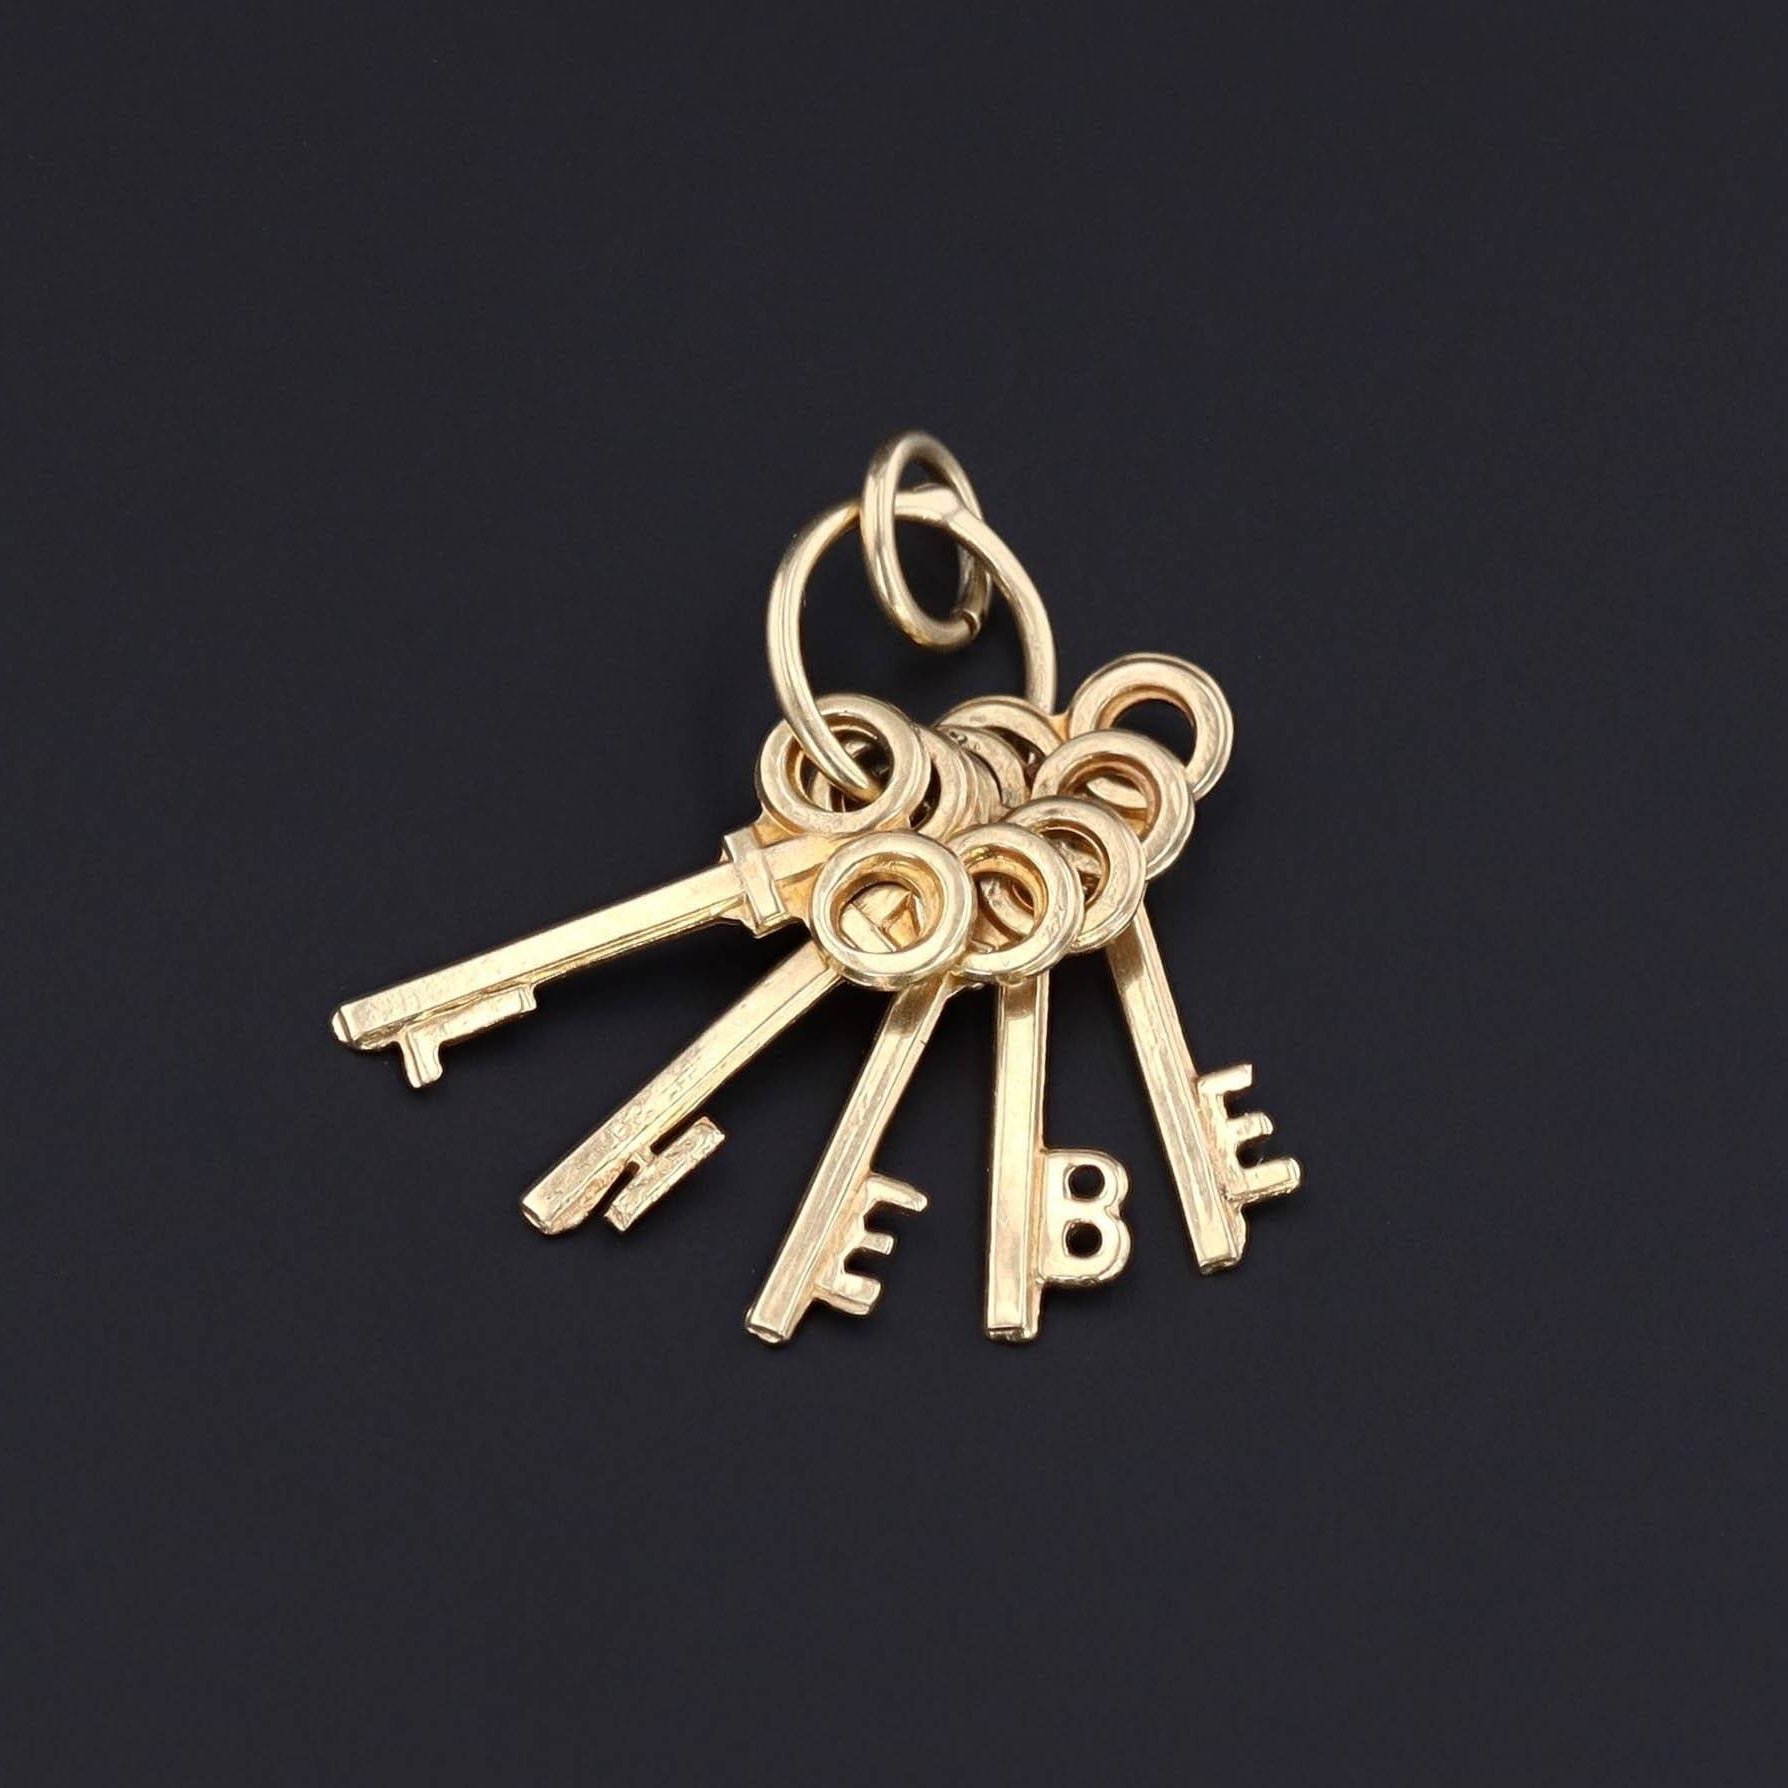 Gold LIEBE (Love in German) Keys Pendant | 14k Gold Vintage Keys Pendant 